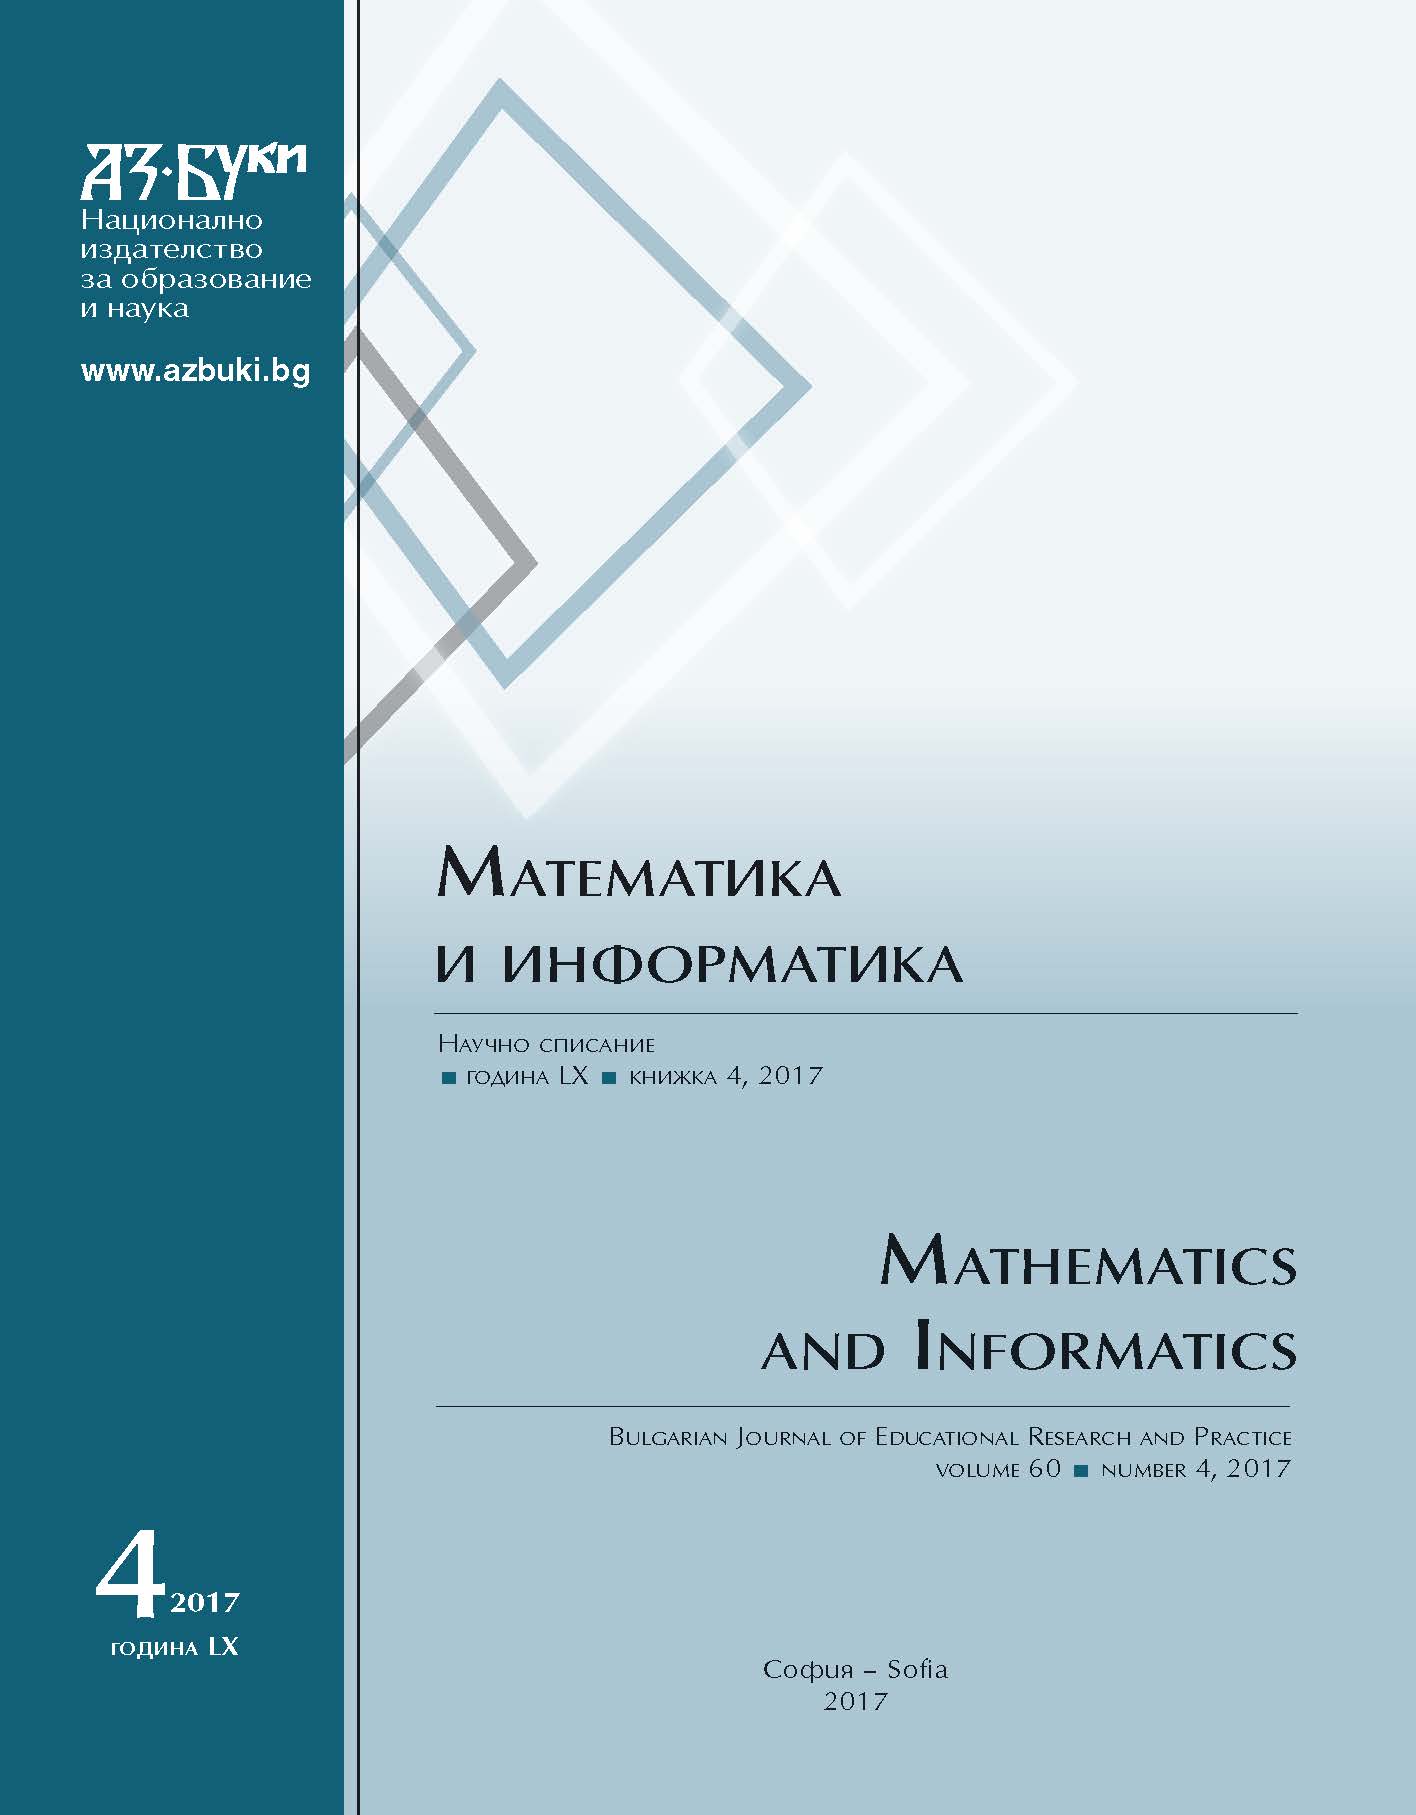 Application of Linear Algebra in Economics Cover Image